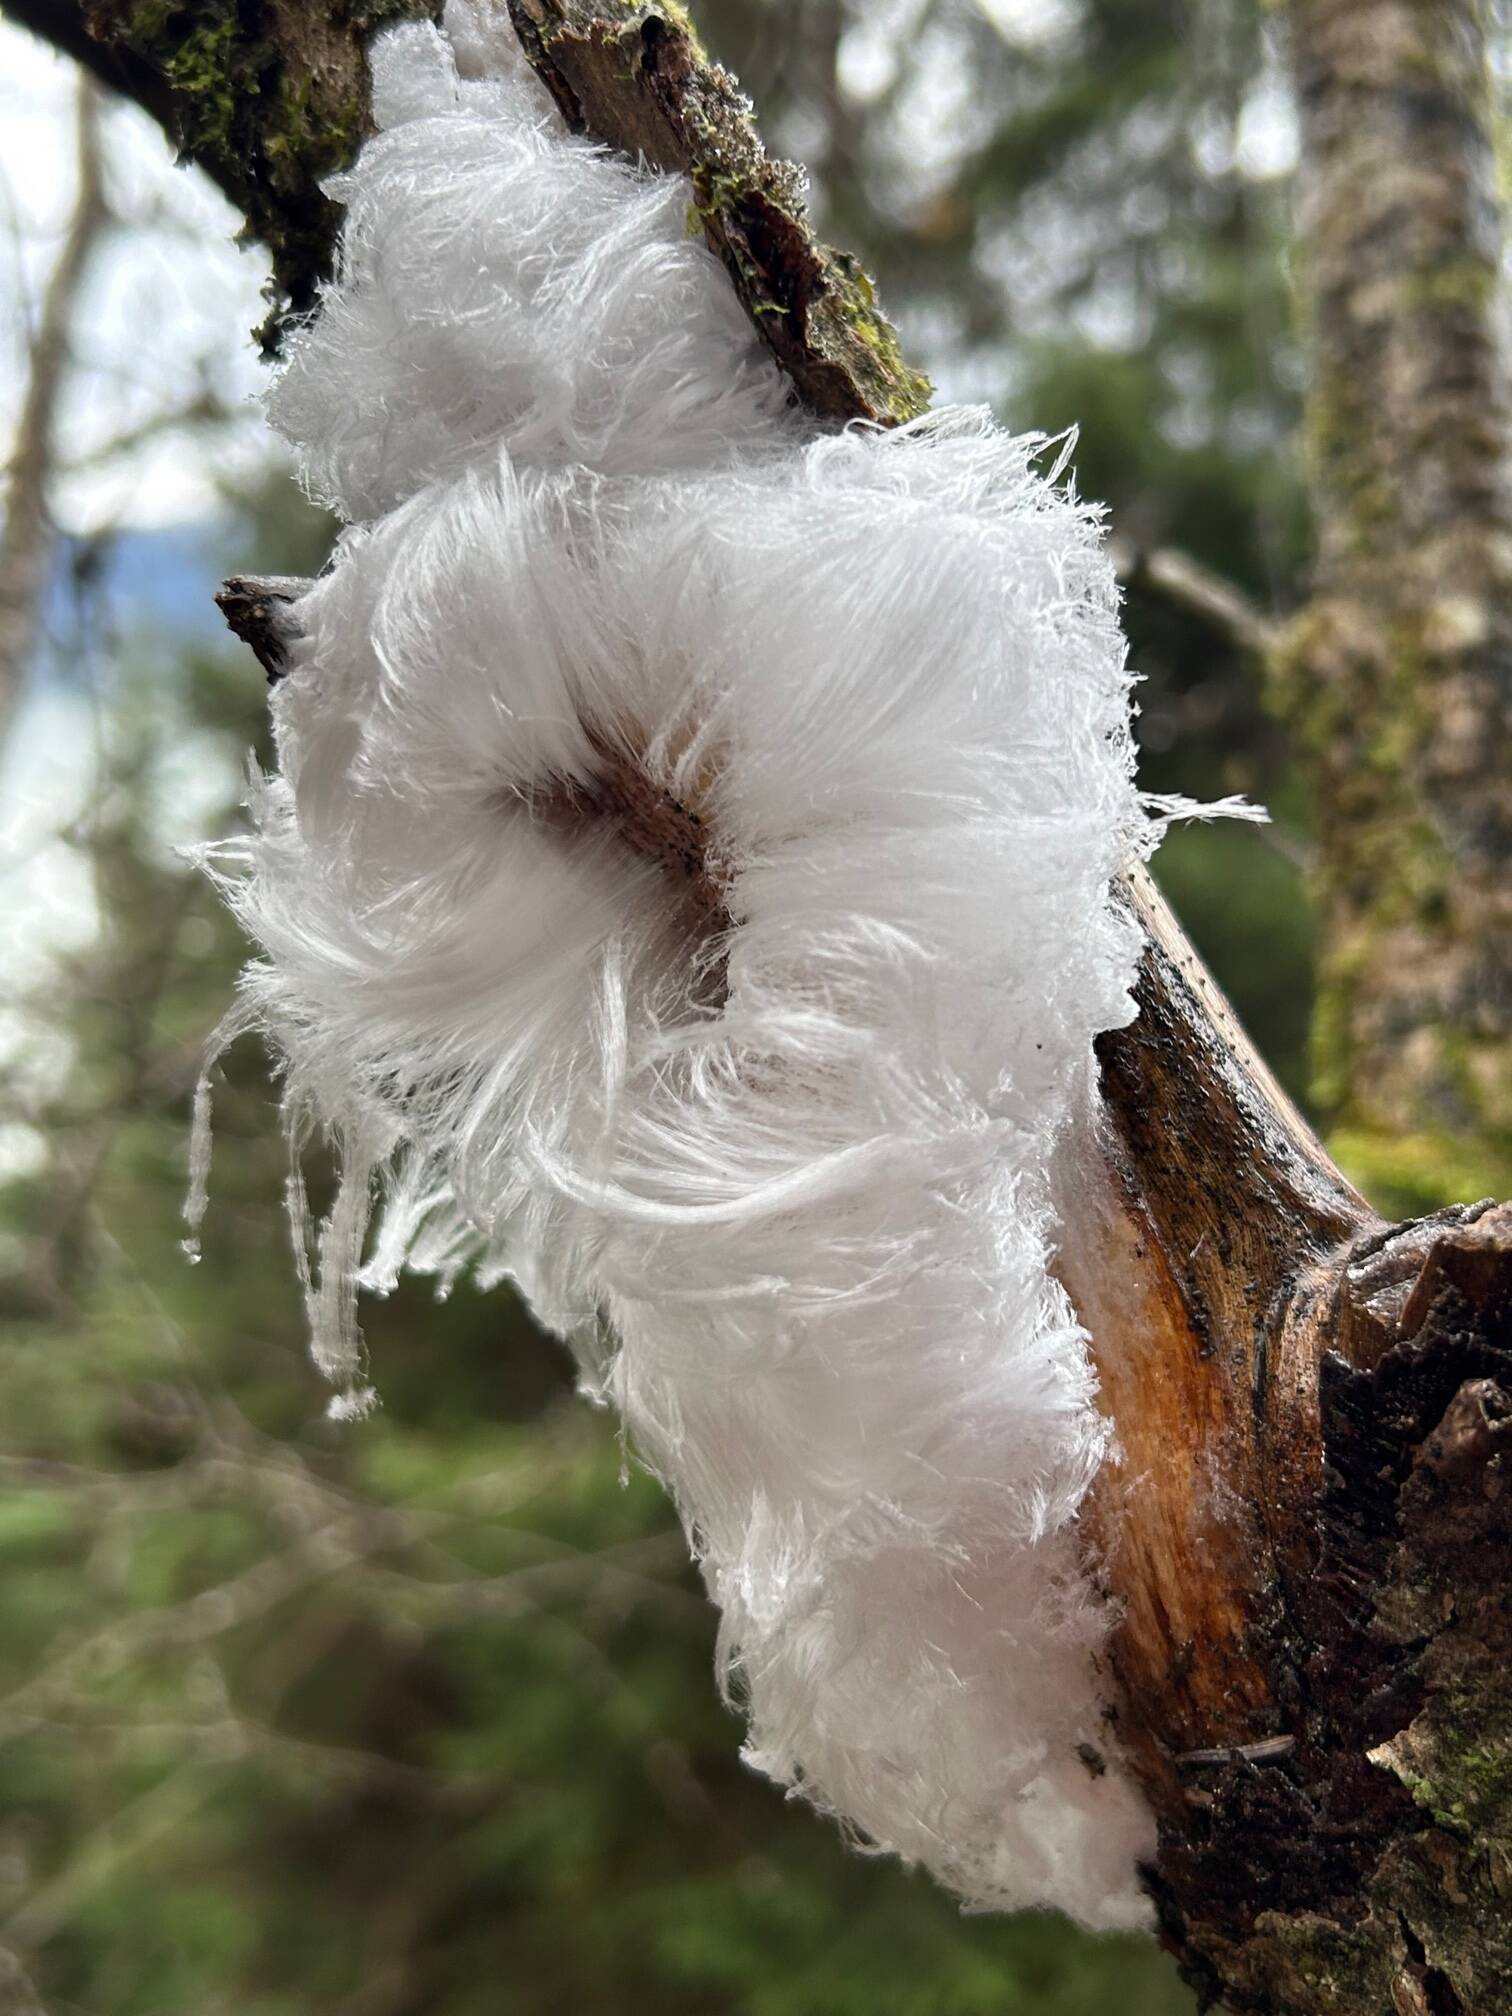 Hair ice along the East Glacier Trail on Nov 29. (Photo by Deborah Rudis)